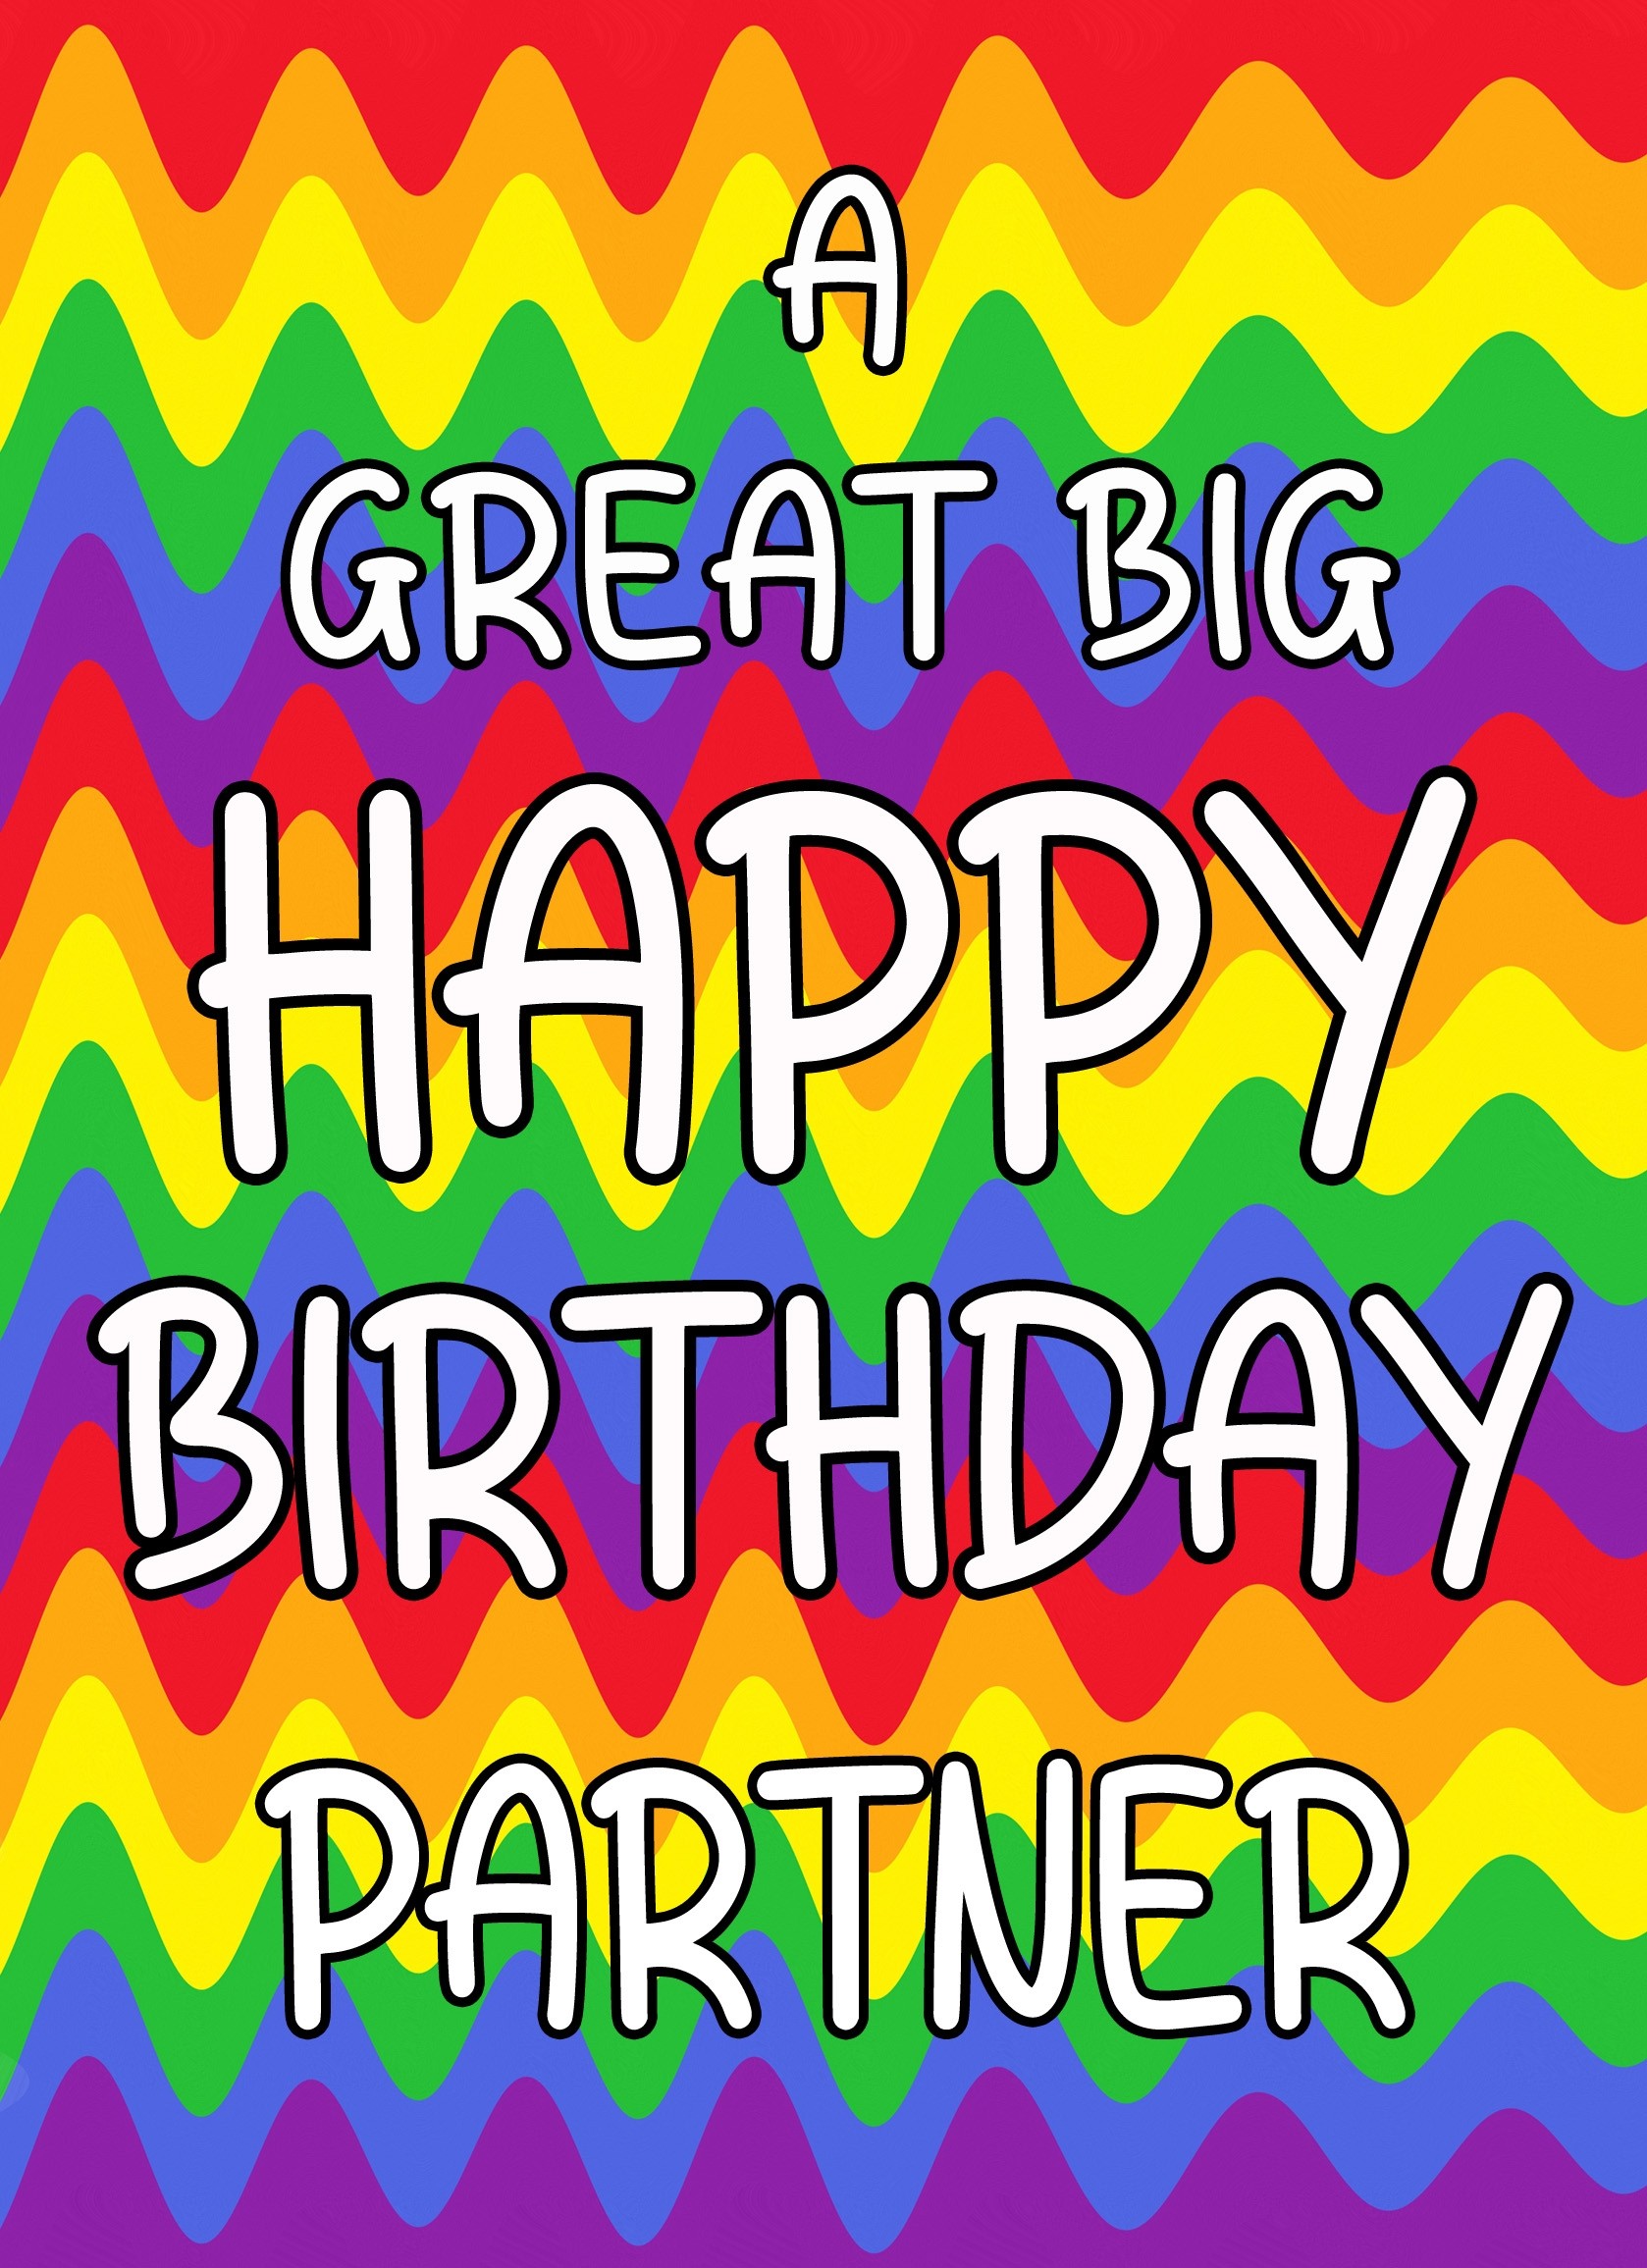 Happy Birthday 'Partner' Greeting Card (Rainbow)